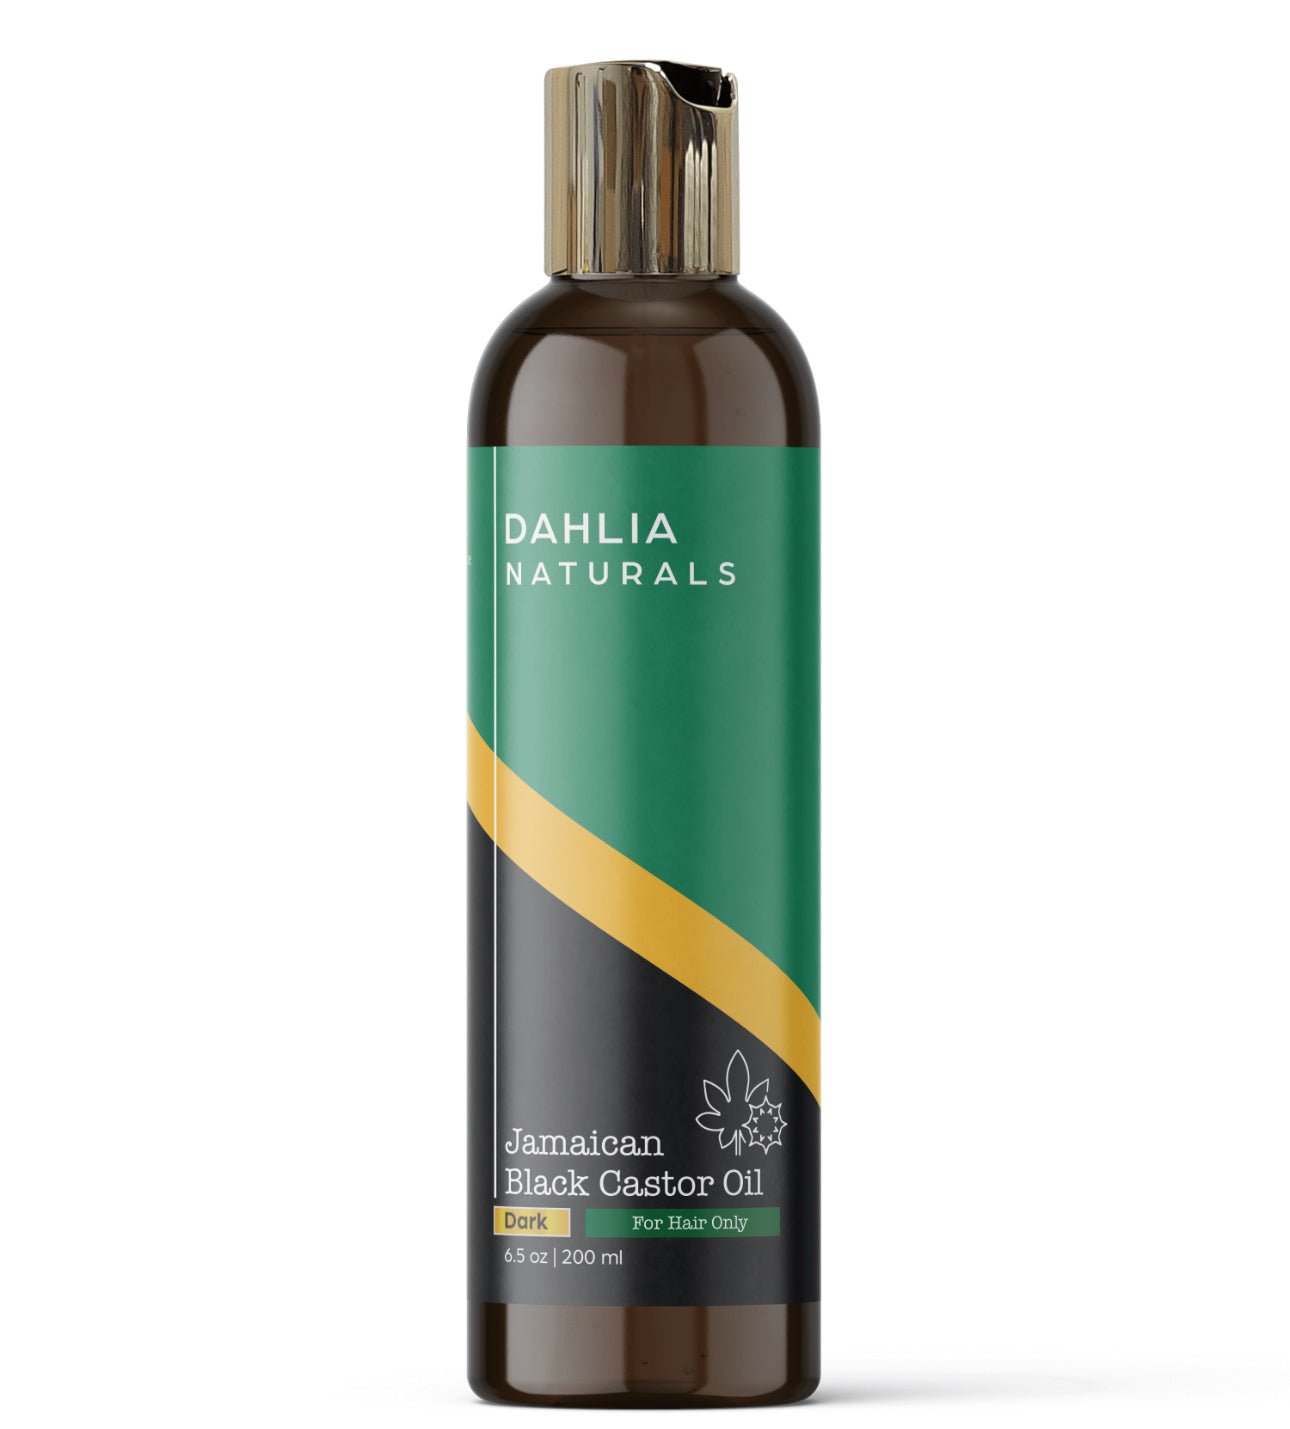 Dahlia Naturals Jamaican Black Castor Oil 200ml - Kuituhiukset.fi